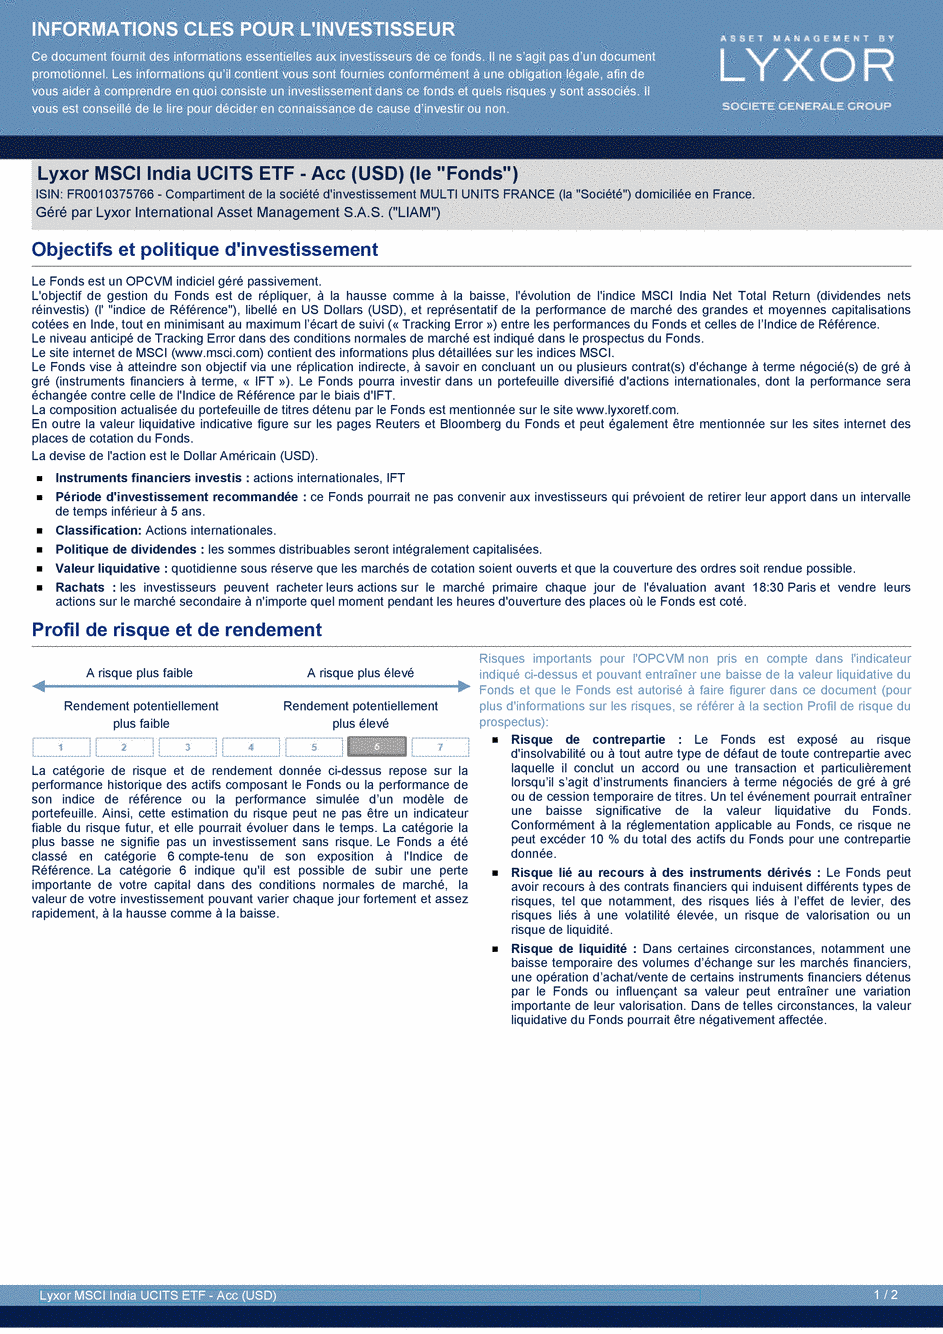 DICI Lyxor MSCI India UCITS ETF - Acc (USD) - 19/02/2021 - Français